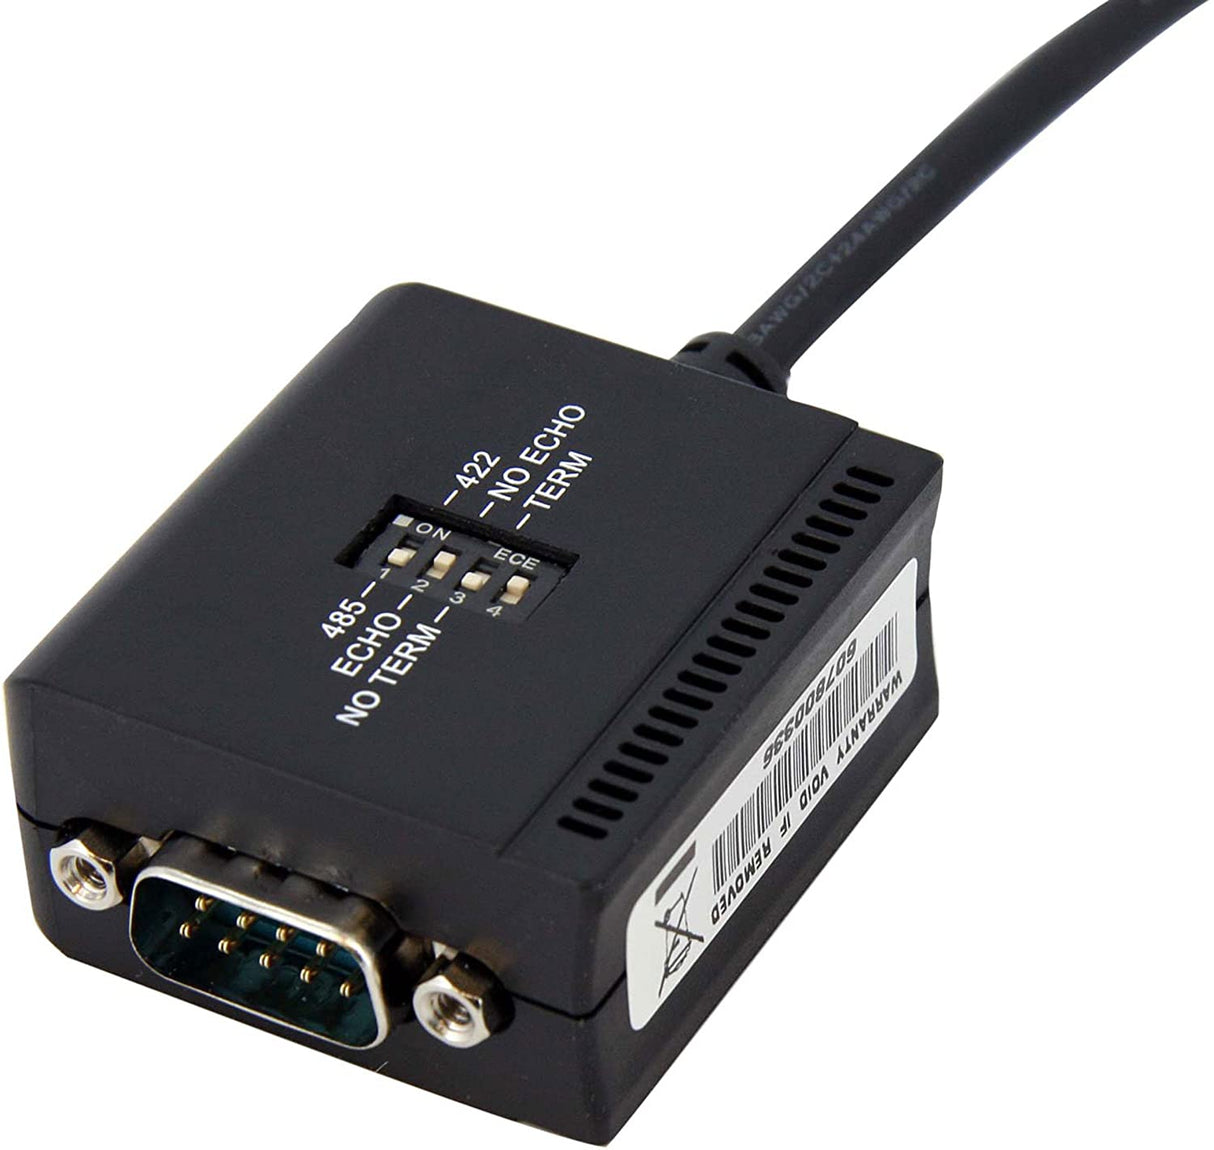 StarTech.com 6 ft Professional RS422/485 USB Serial Cable Adapter w/ COM Retention (ICUSB422)